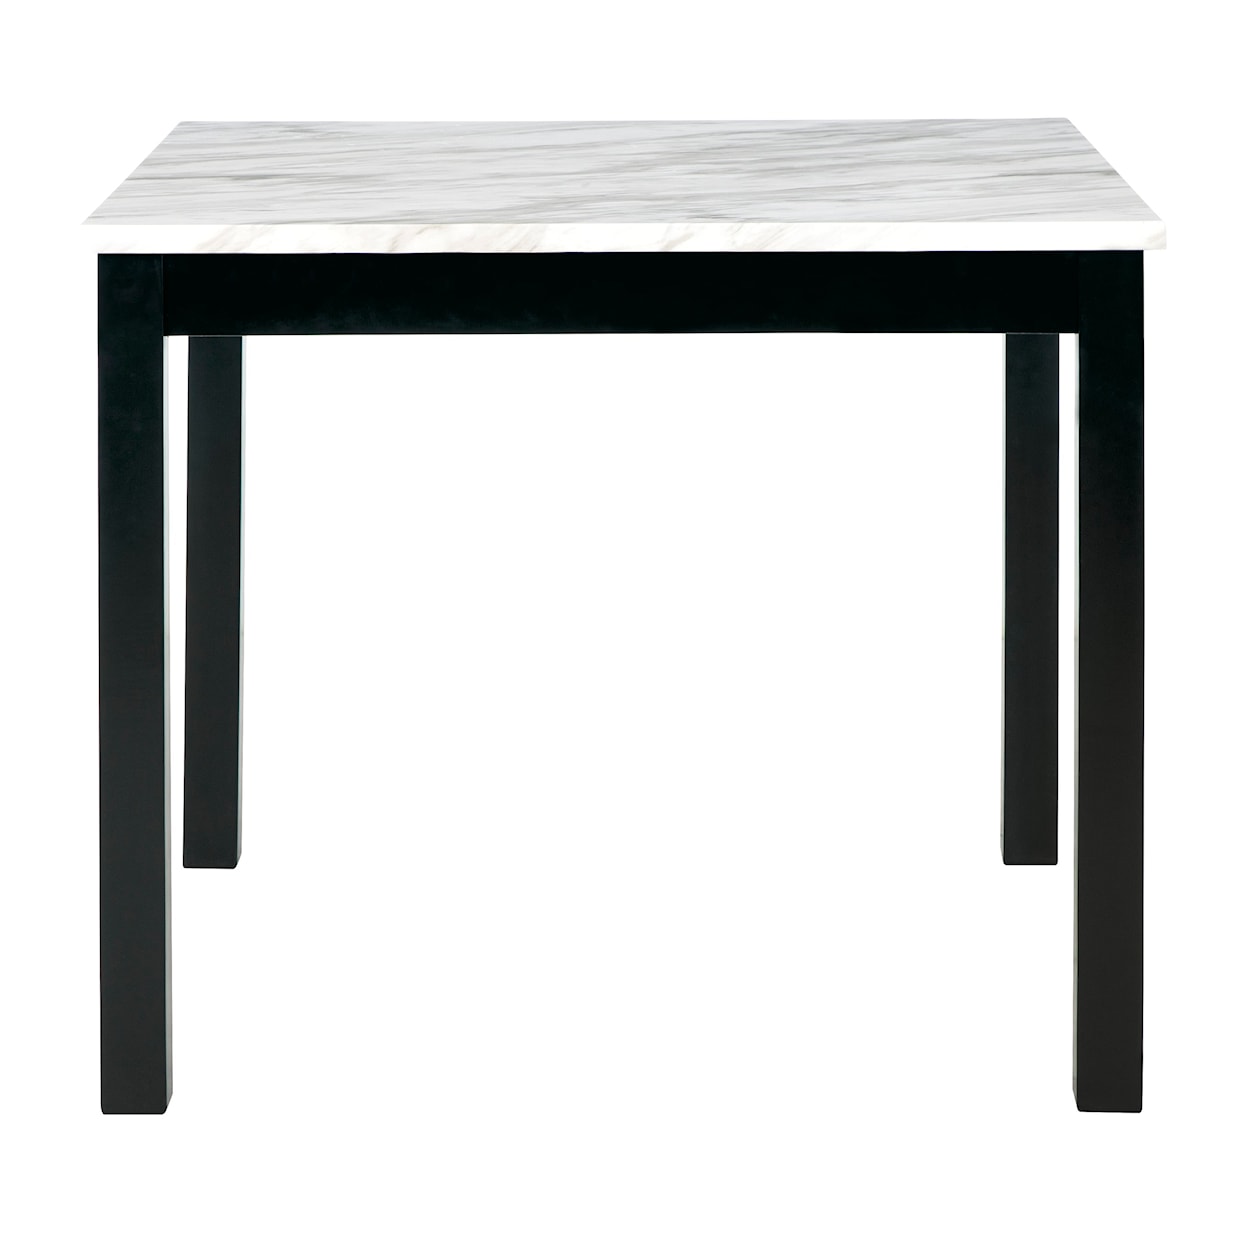 Ashley Furniture Signature Design Cranderlyn 5-Piece Counter Dining Table Set